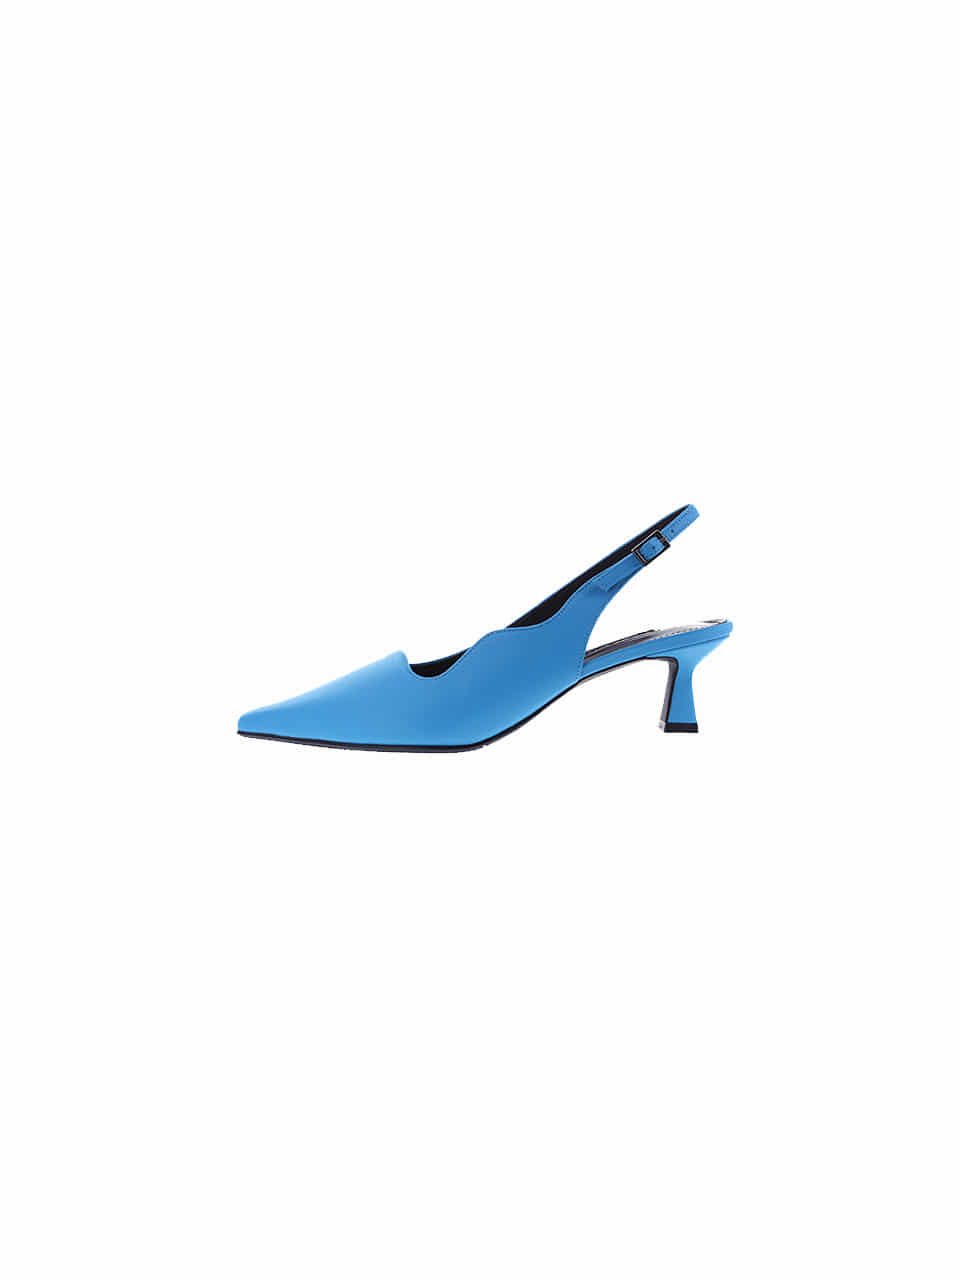 WM slingback shoes_blue_20518